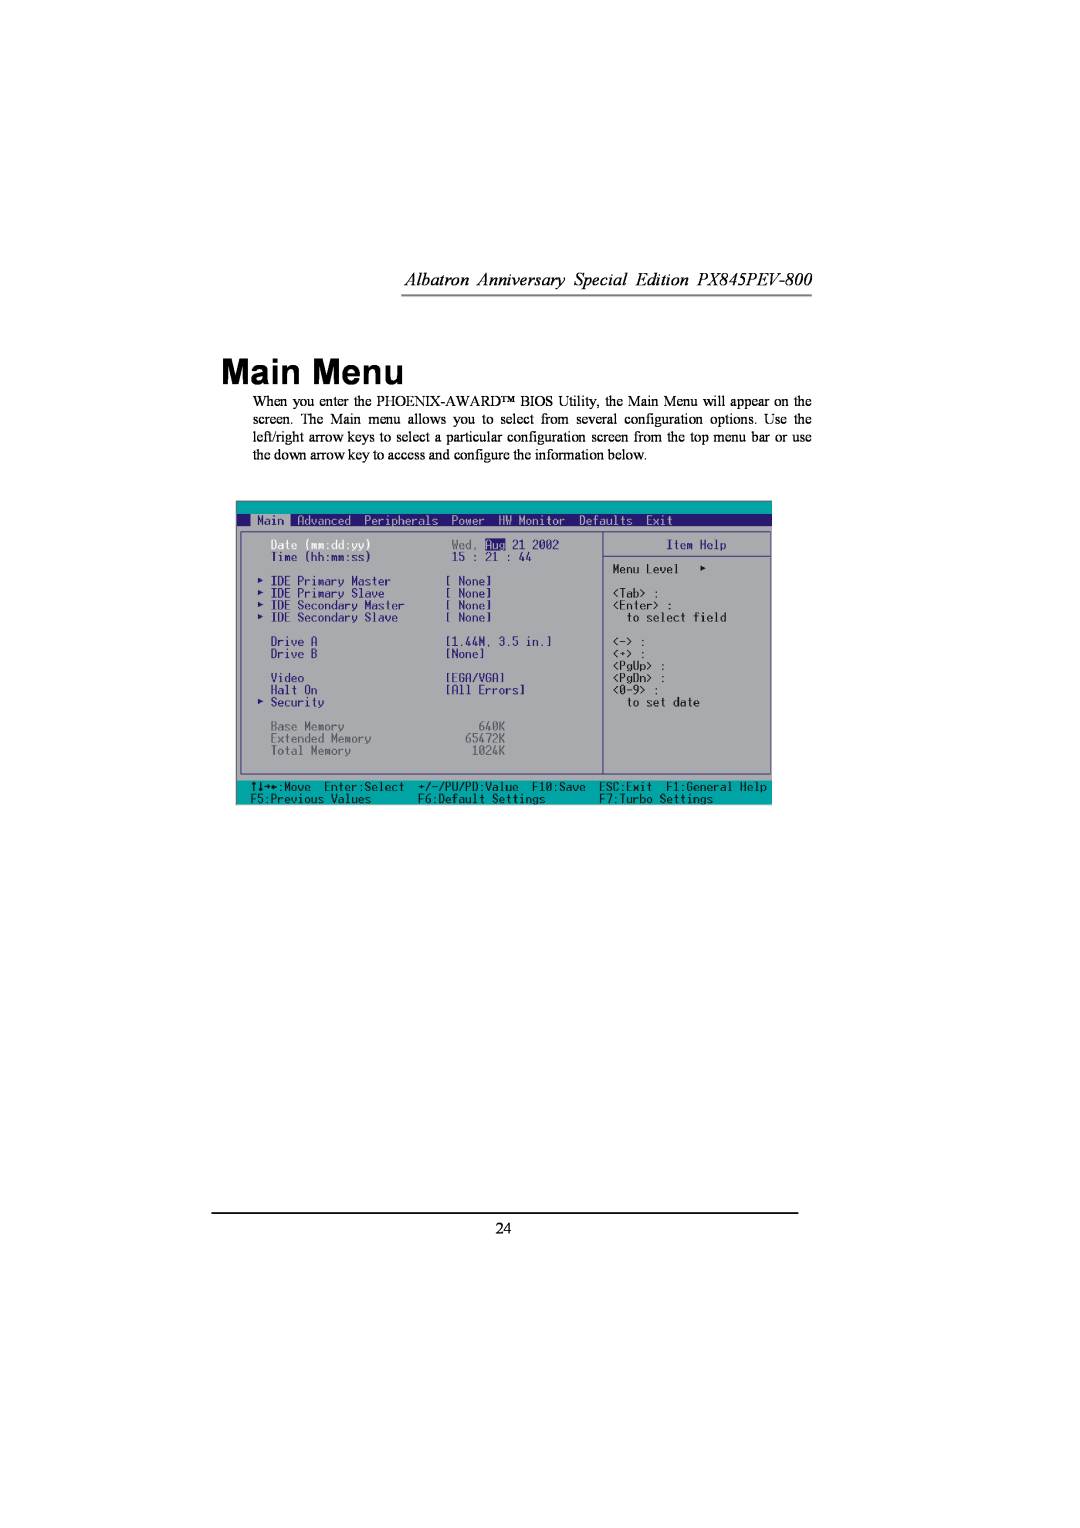 Albatron Technology manual Main Menu, Albatron Anniversary Special Edition PX845PEV-800 